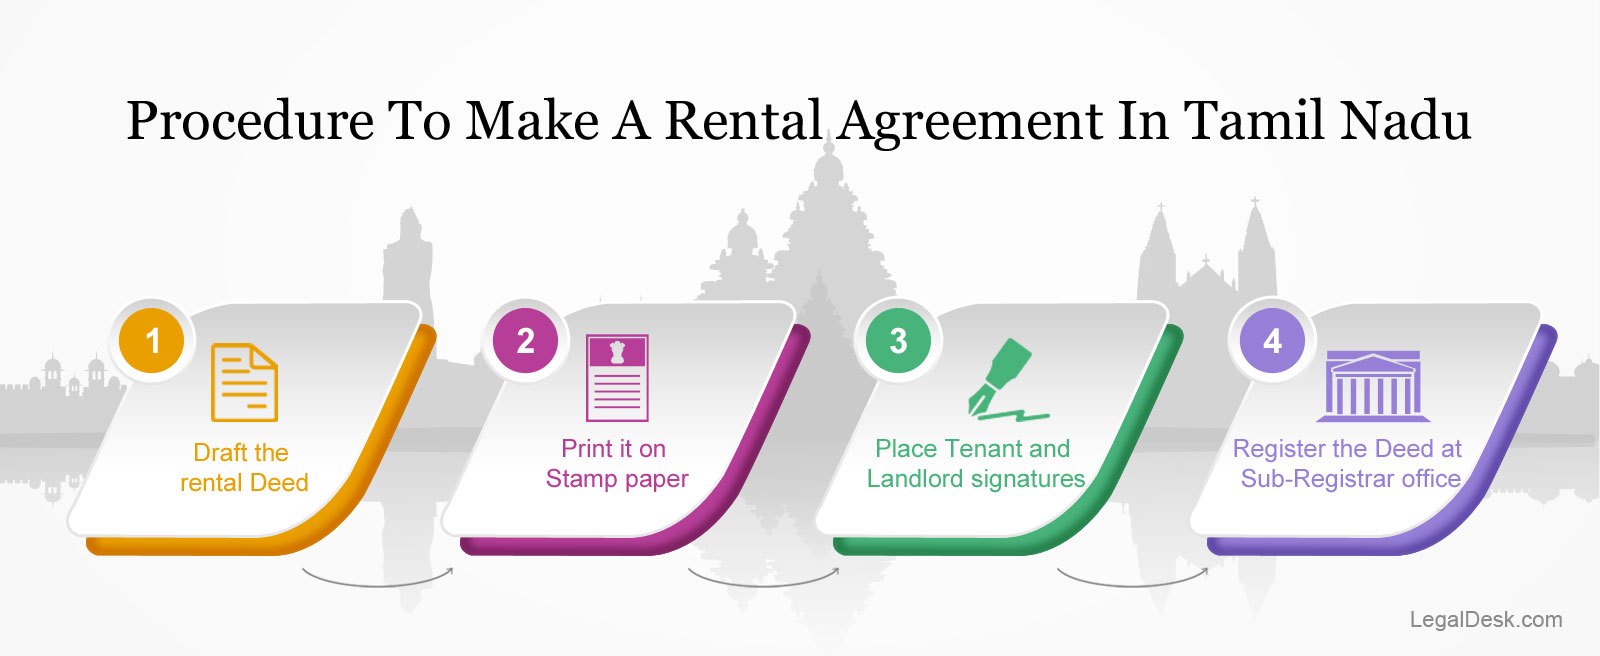 legaldesk.com Rental Agreements for Chennai and Tamil Nadu